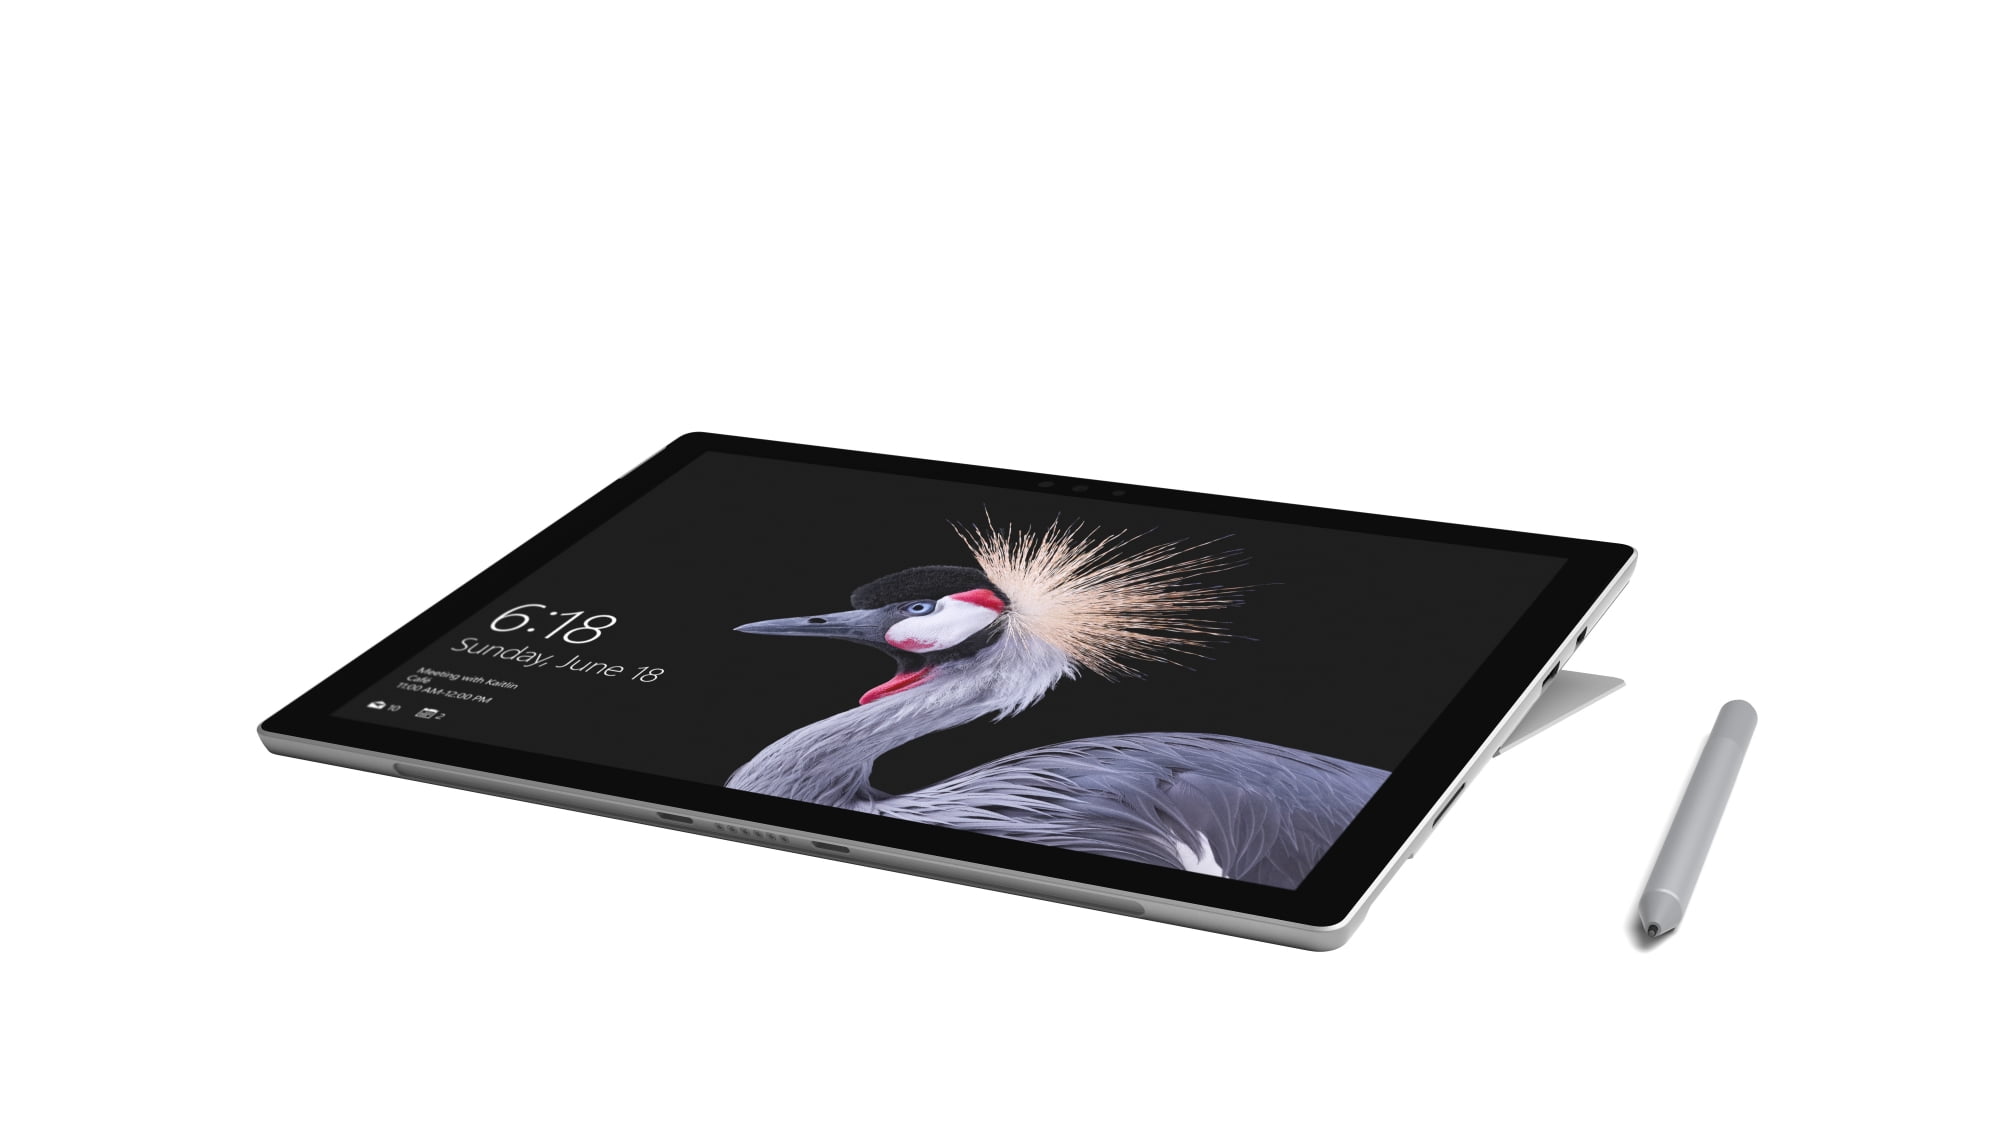 Microsoft Surface Pro 5th Gen Intel Core i5, 8 GB RAM, 128 GB